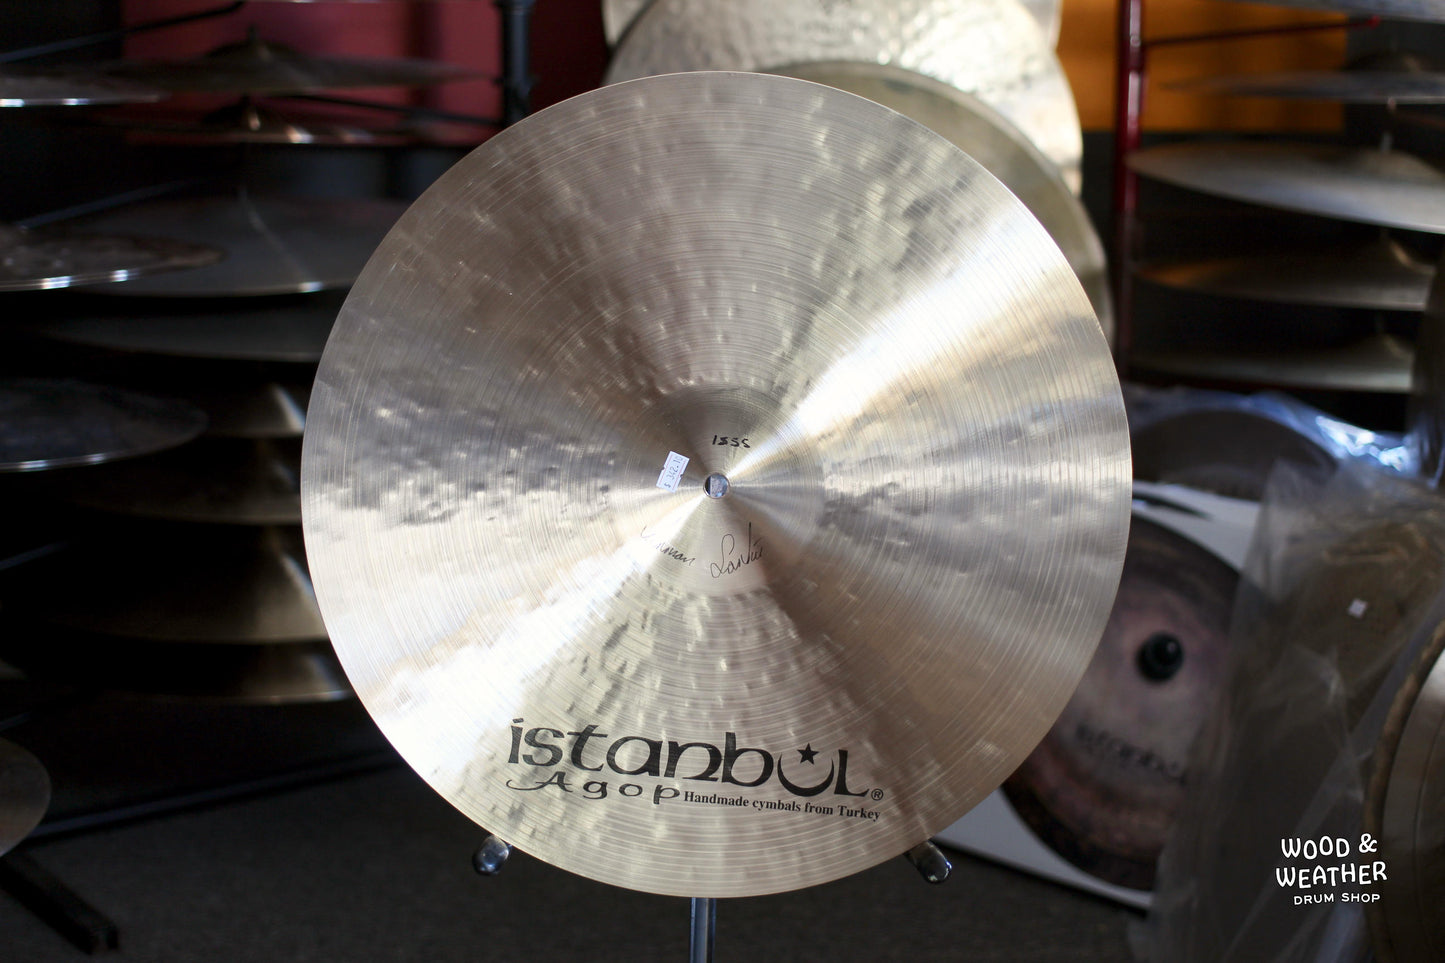 Istanbul Agop 18" Traditional Medium Crash Cymbal 1555g